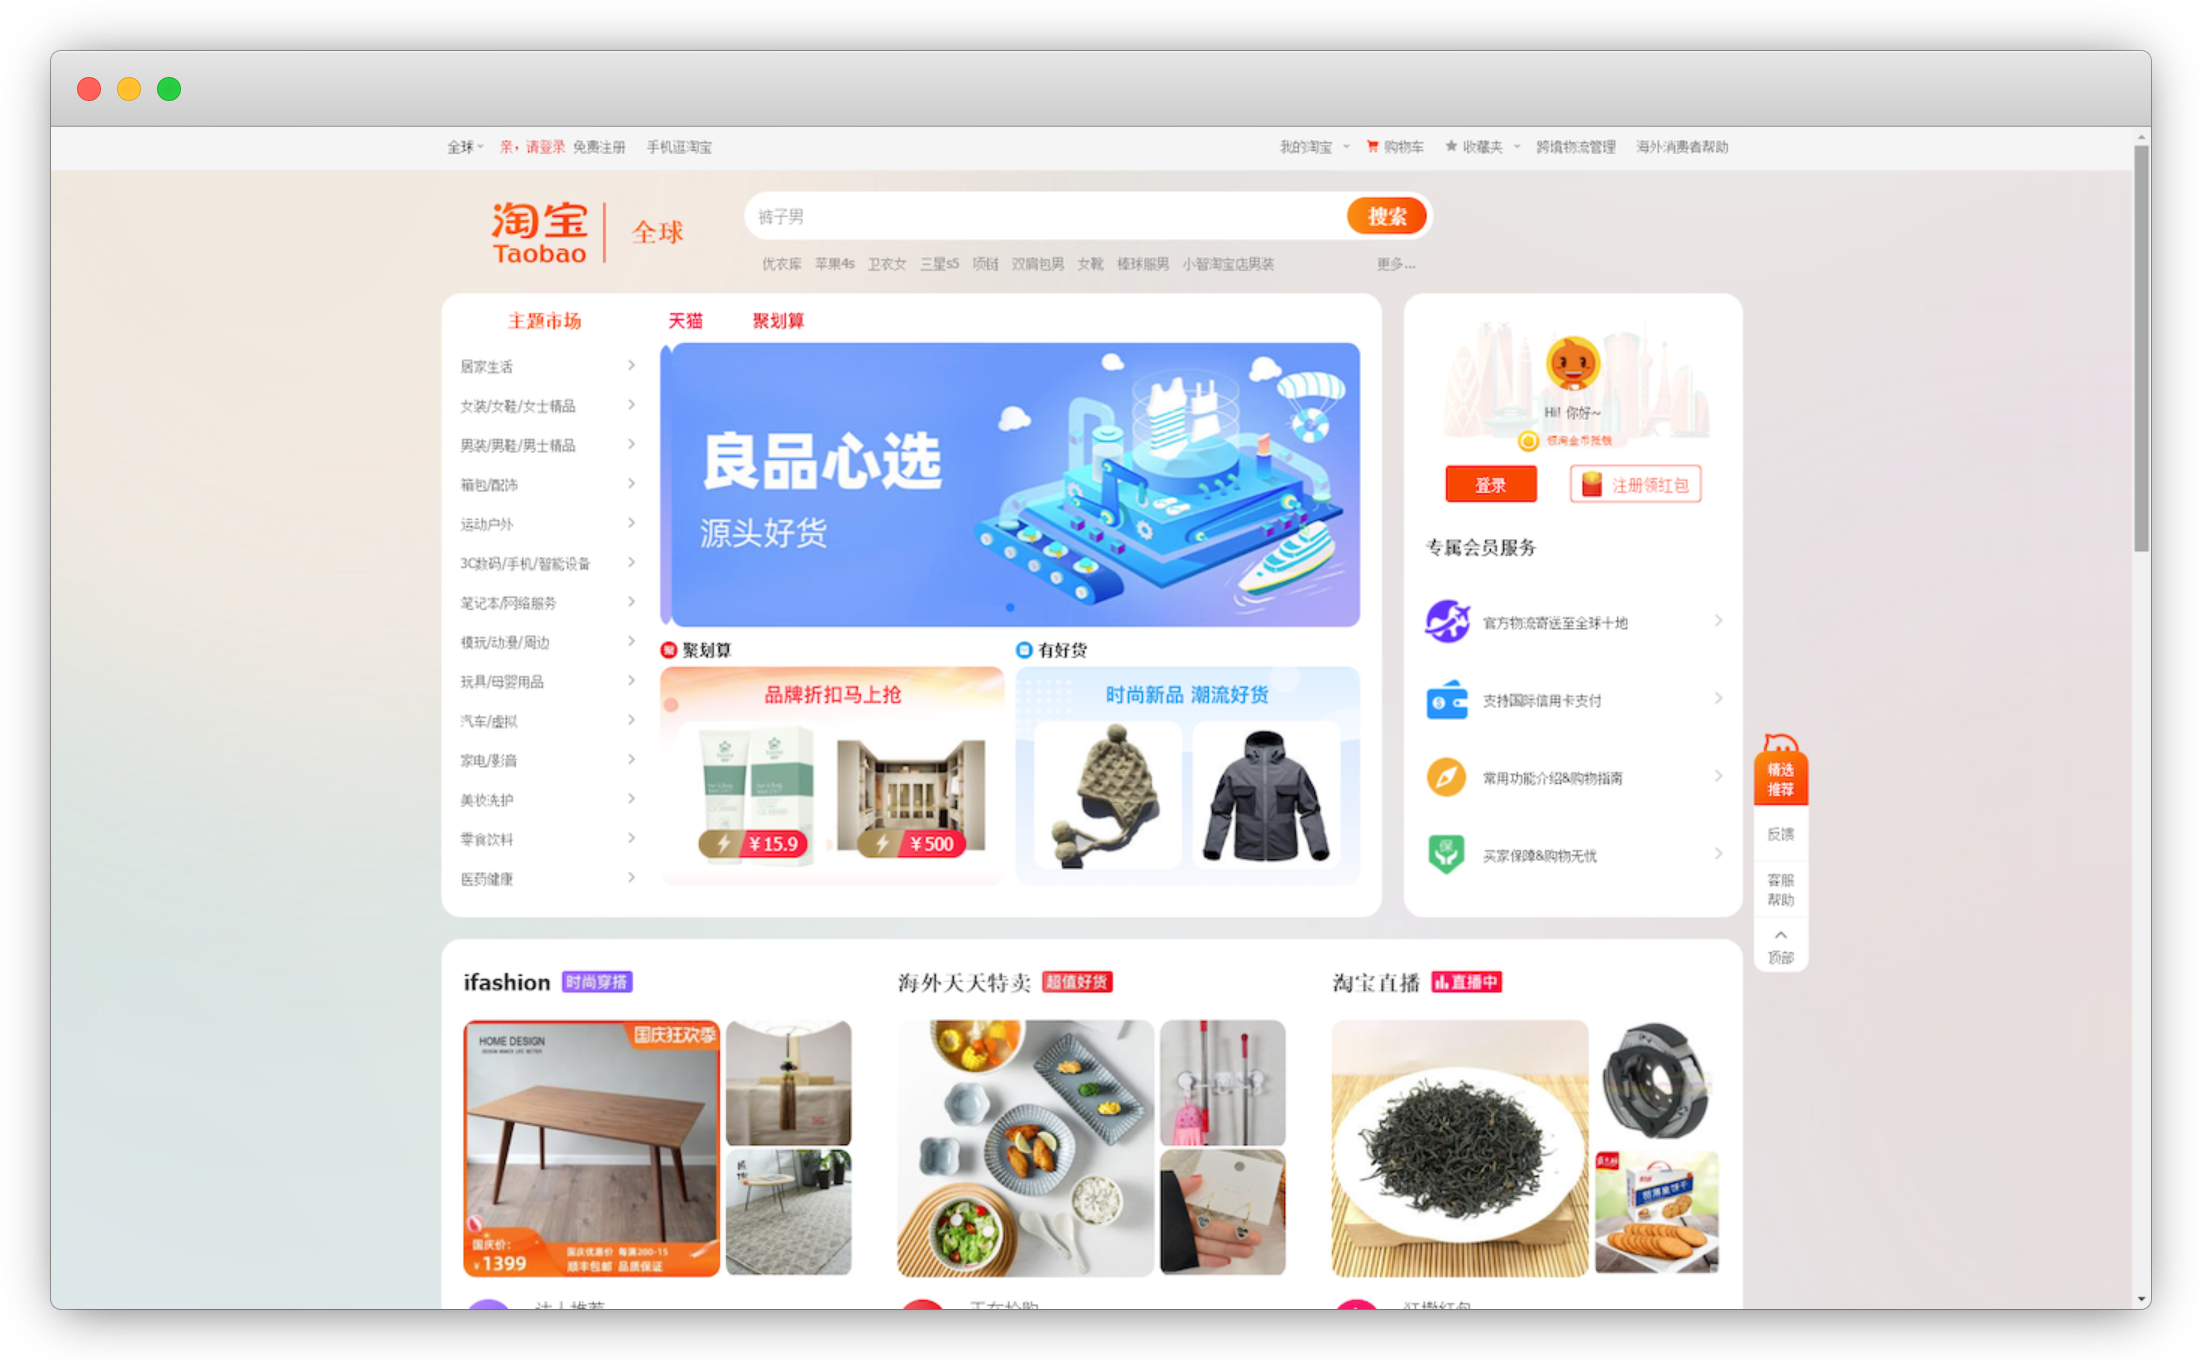 ecommerce-companies-alibaba-group-taobao